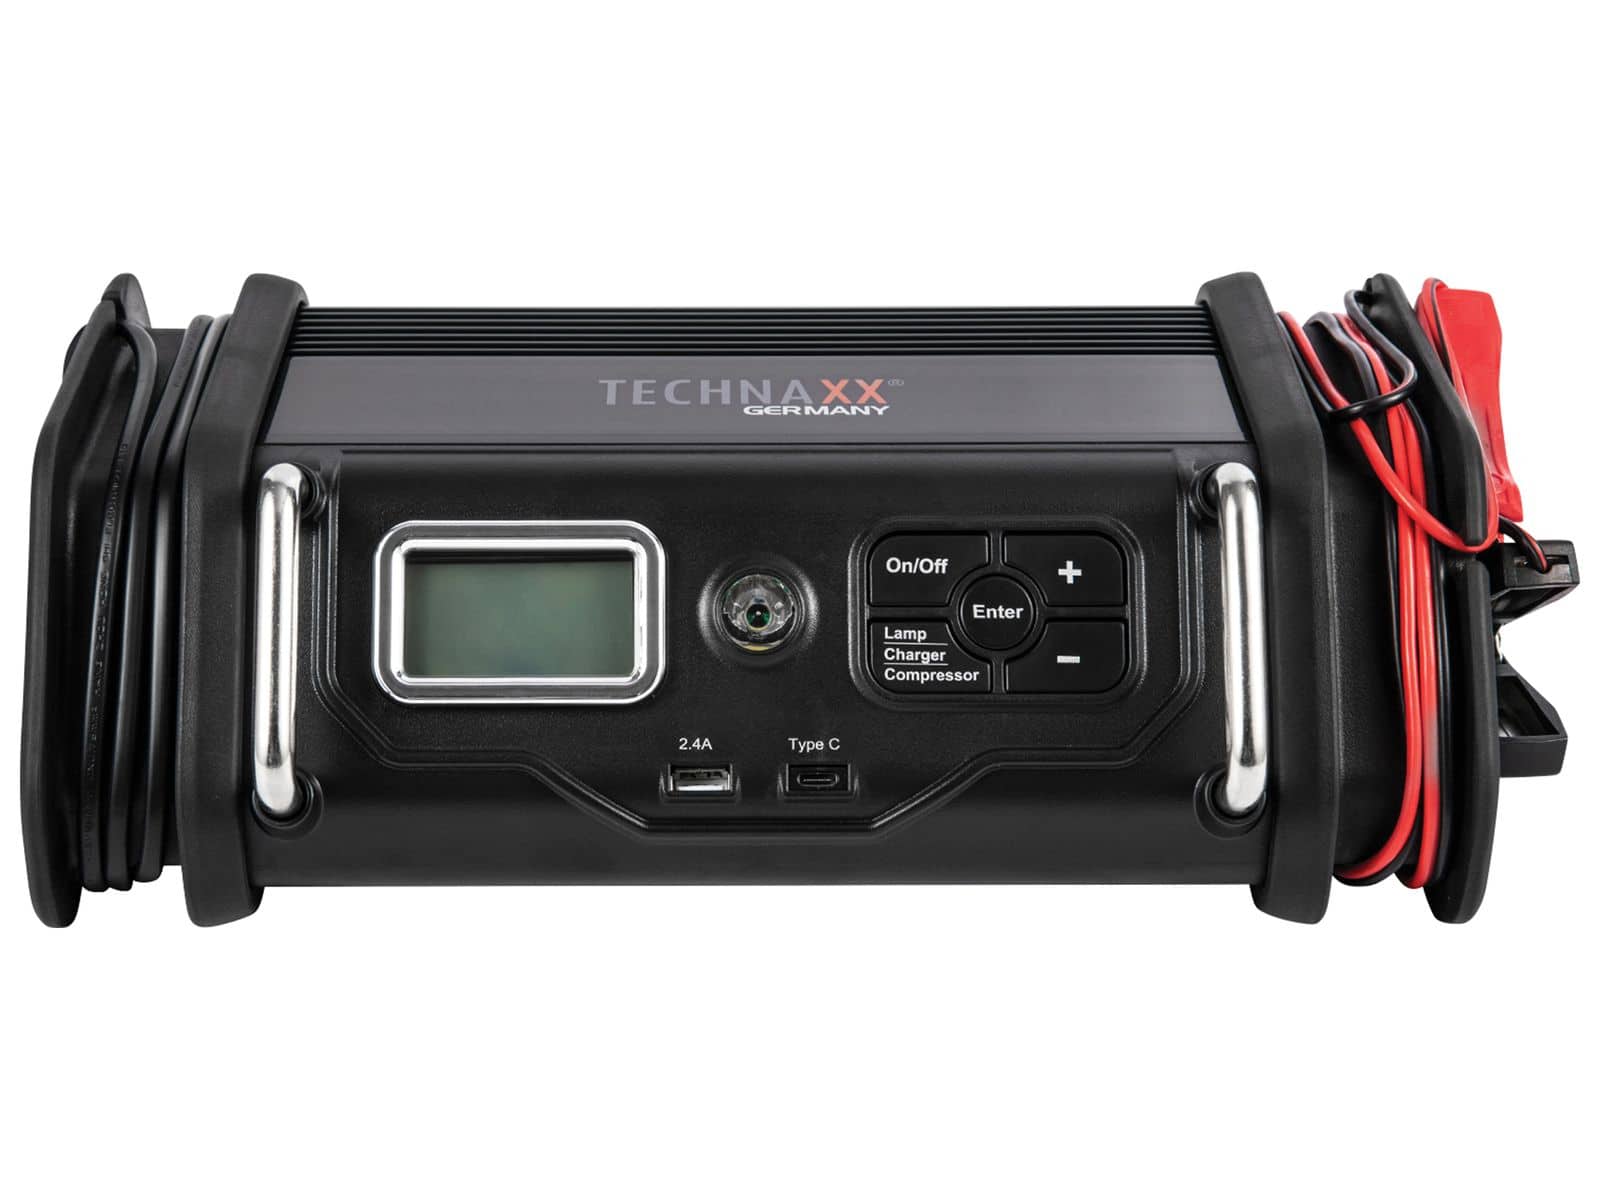 TECHNAXX Batterieladegerät TX-193, 10 A, mit Kompressor von Technaxx